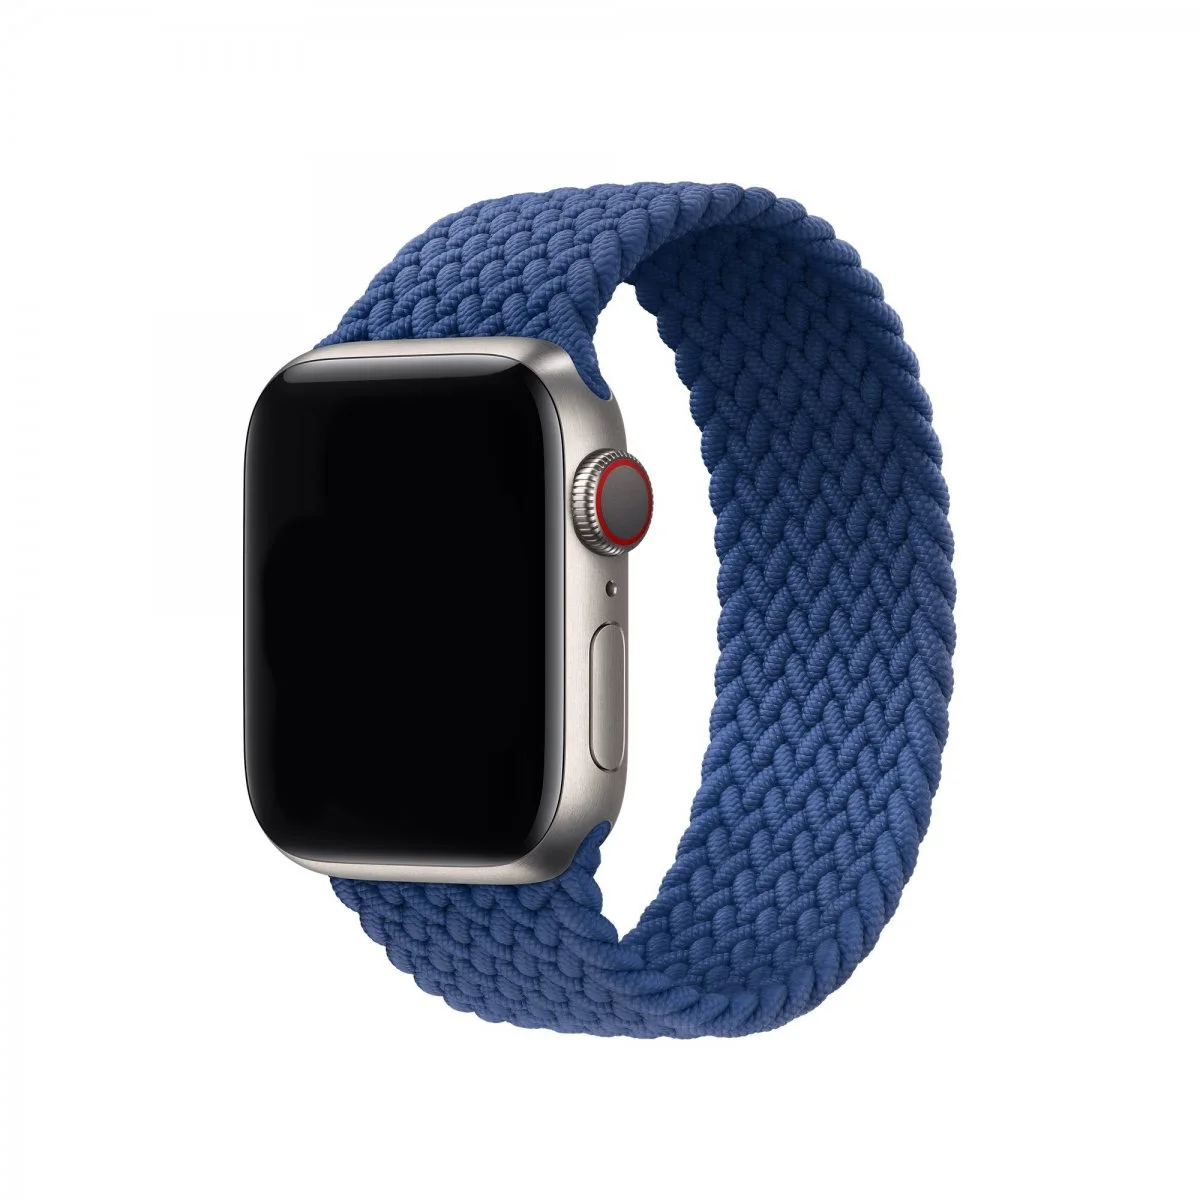 Řemínek iMore Braided Solo Loop Apple Watch Series 1/2/3 38mm - atlanticky modrý (S)